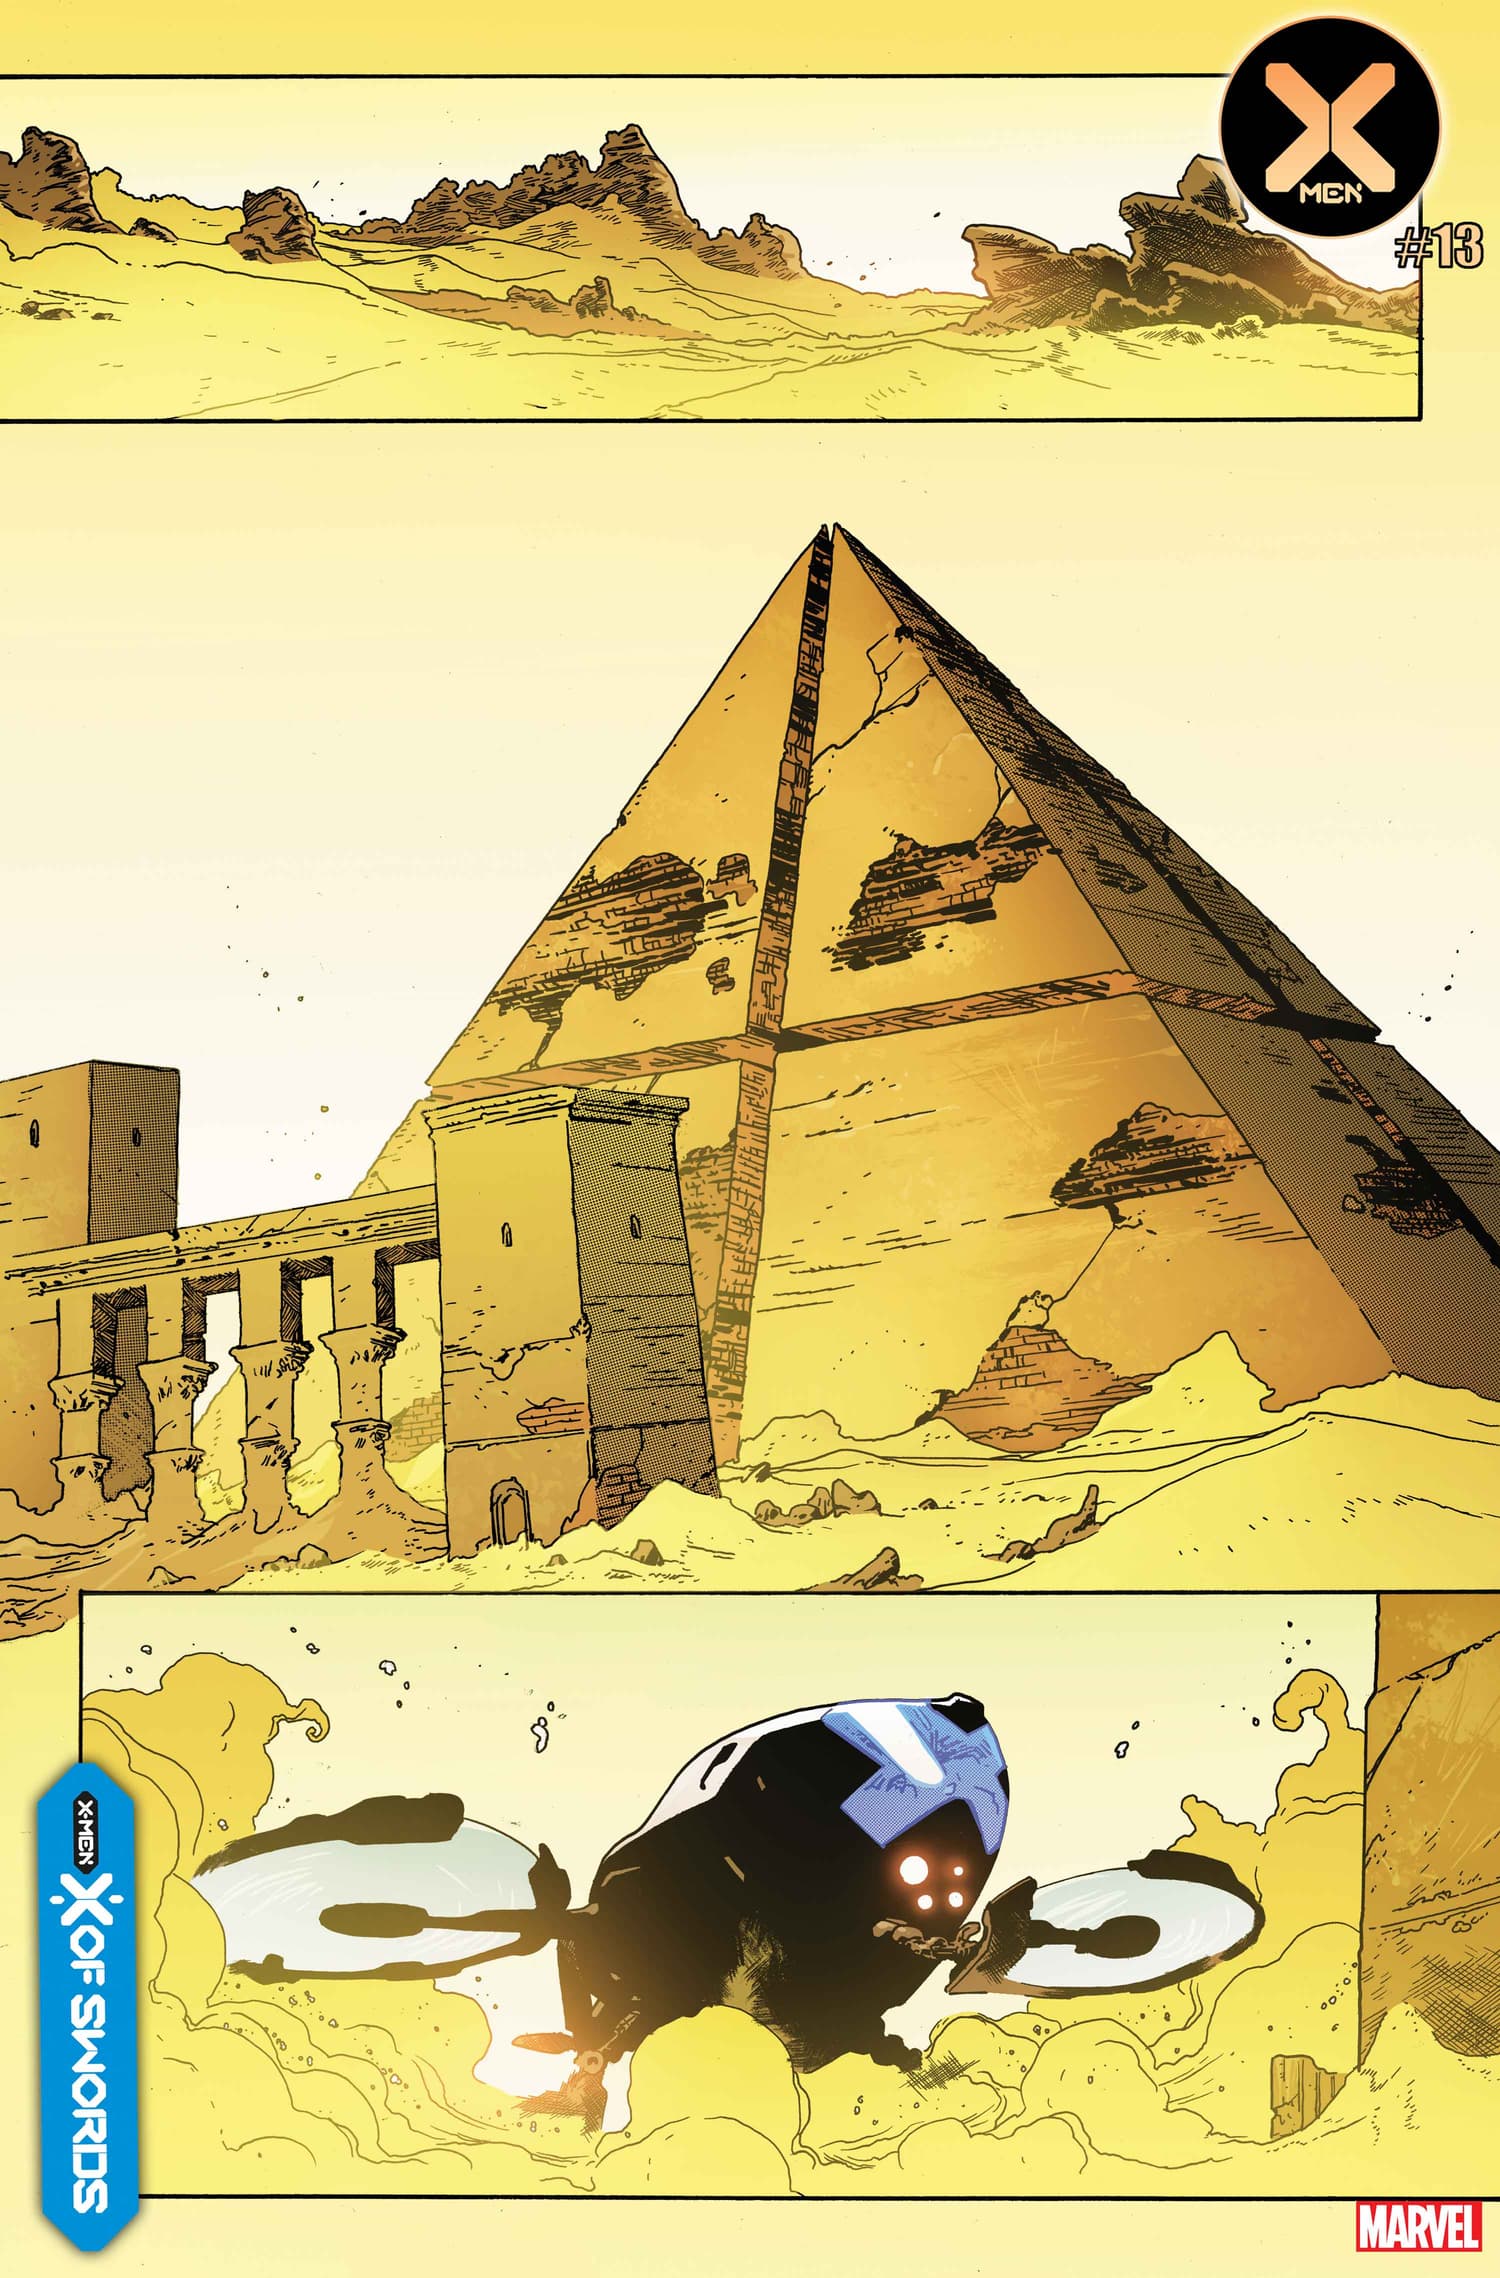 X-Men #13 preview by Mahmud Asrar